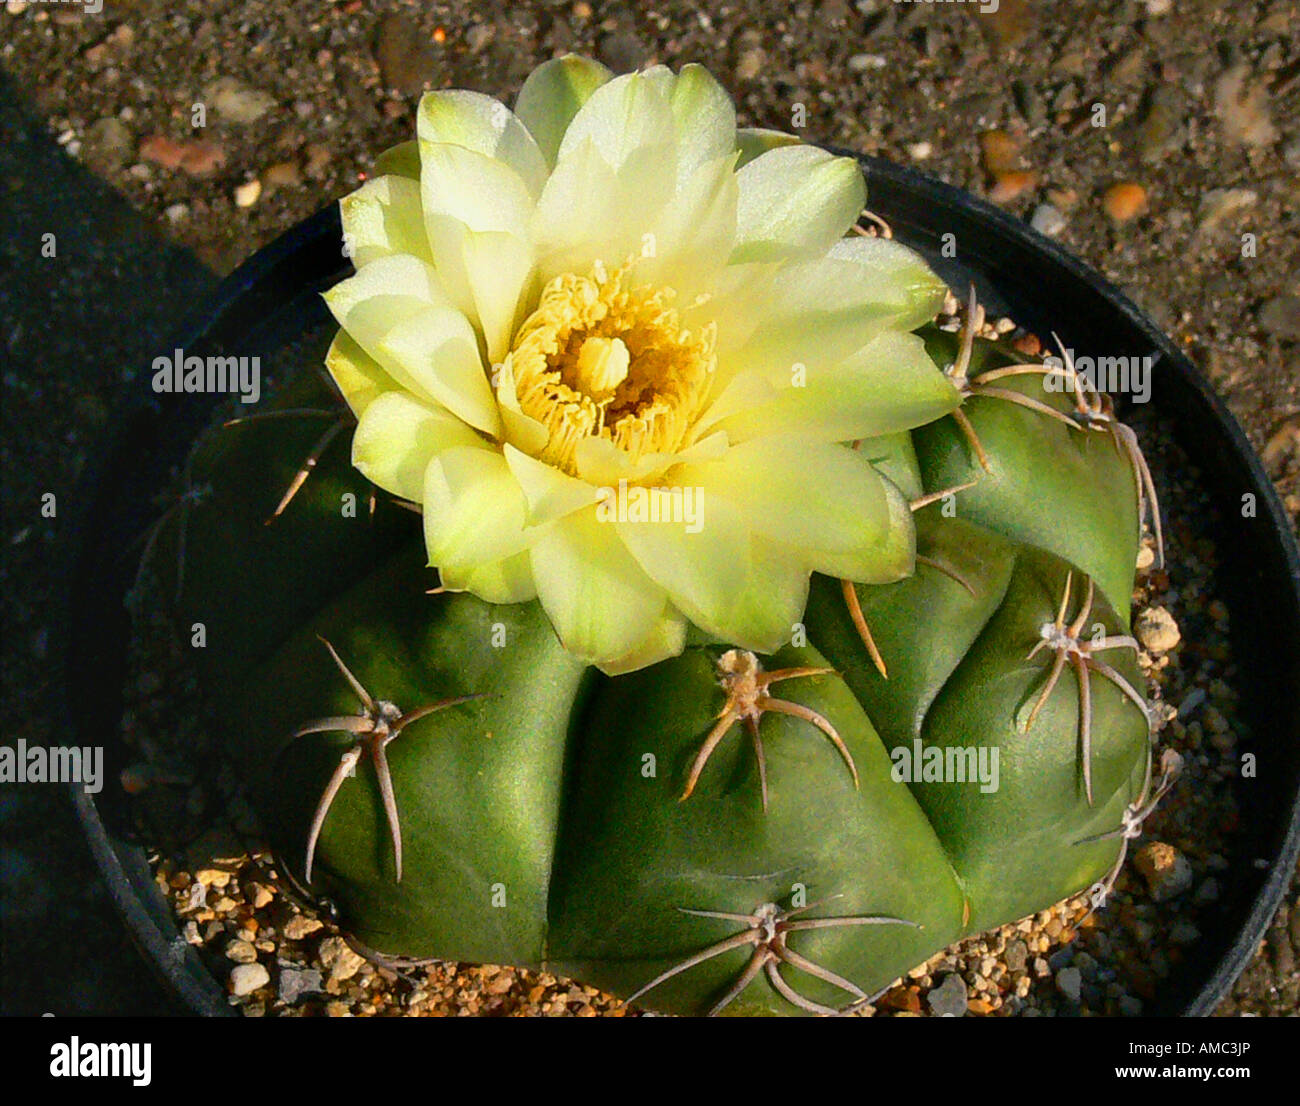 Gymnocalycium (Gymnocalycium denudatum), potted plant Stock Photo